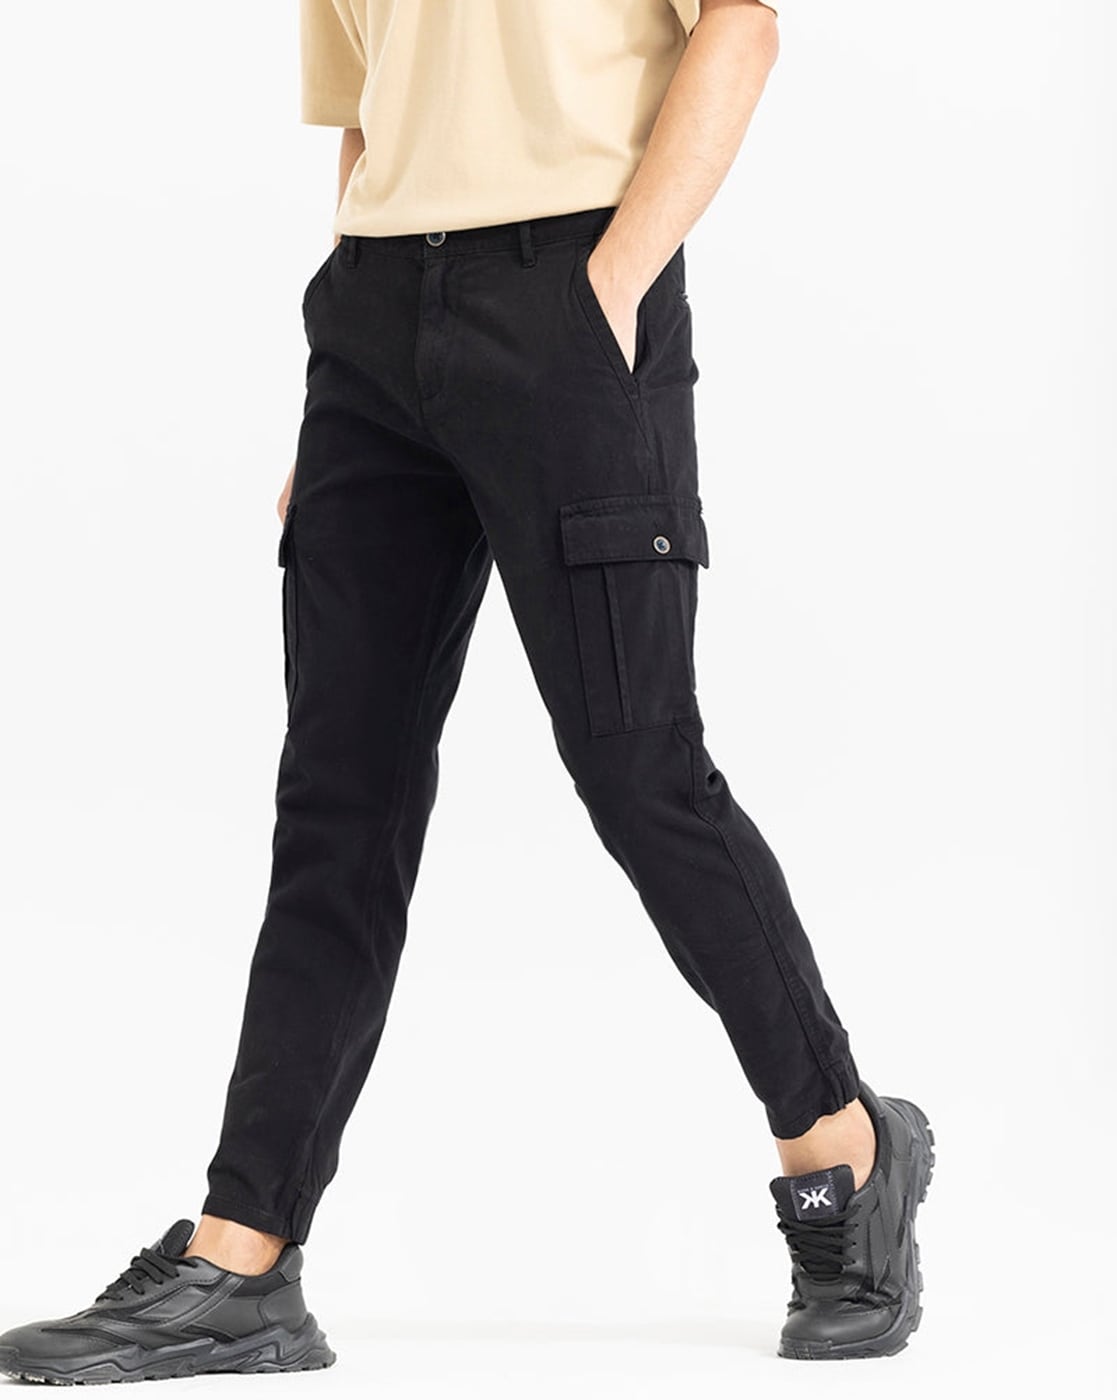 Buy Khaki Trousers  Pants for Men by CINOCCI Online  Ajiocom